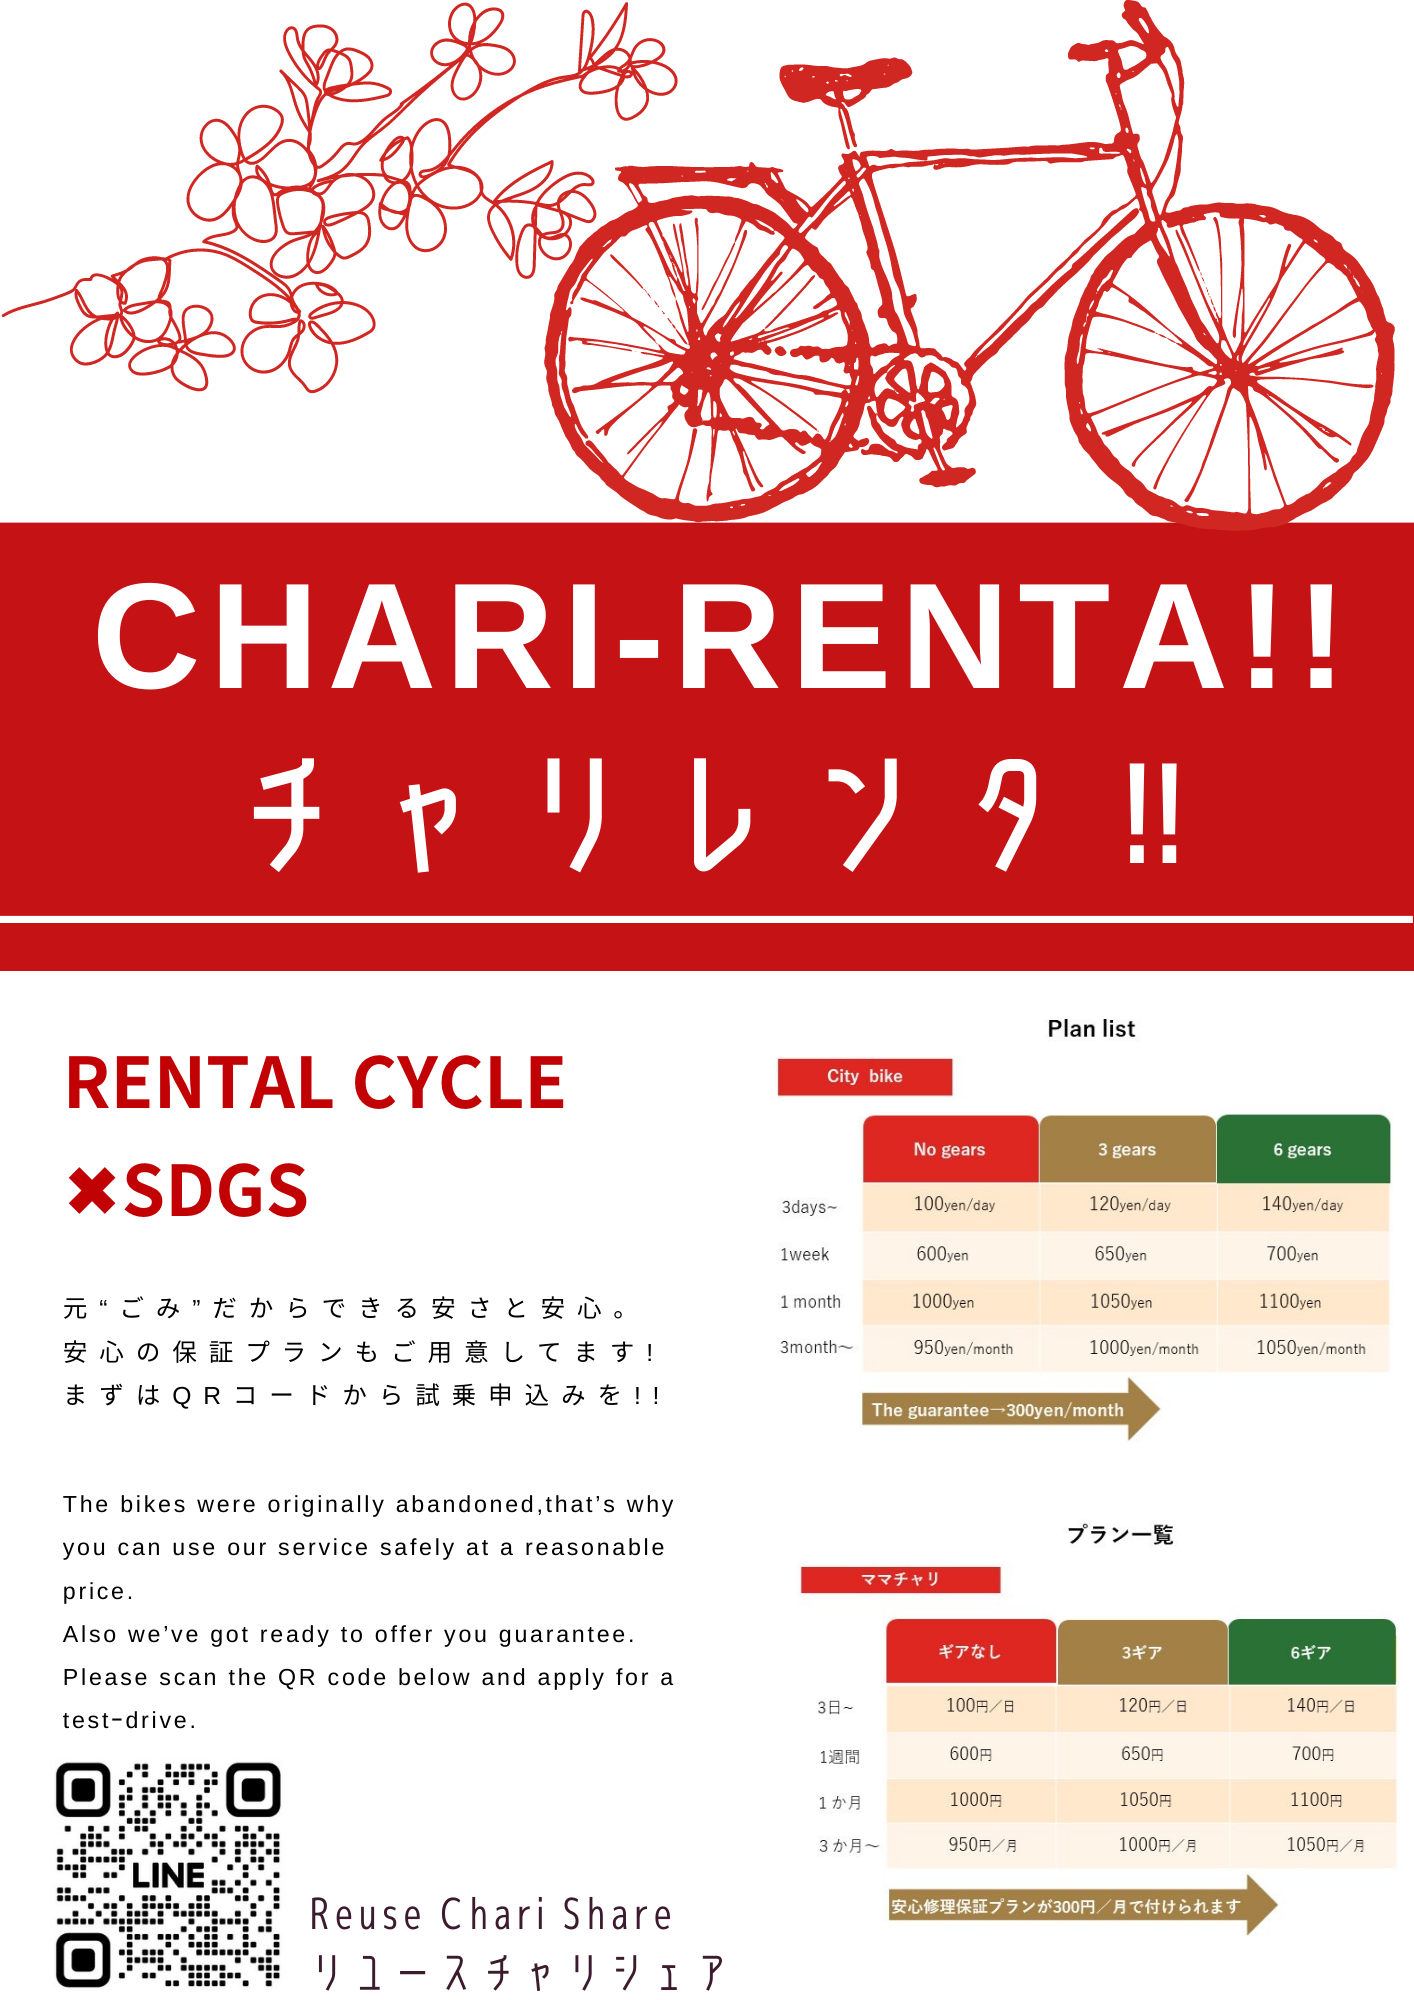 Earth-friendly bike rental service, Chari-Renta!! Now on sale! 地球に優しいレンタサイクル、チャリレンタ!! 大好評実施中！【リユースチャリシェア Reuse Chari Share】